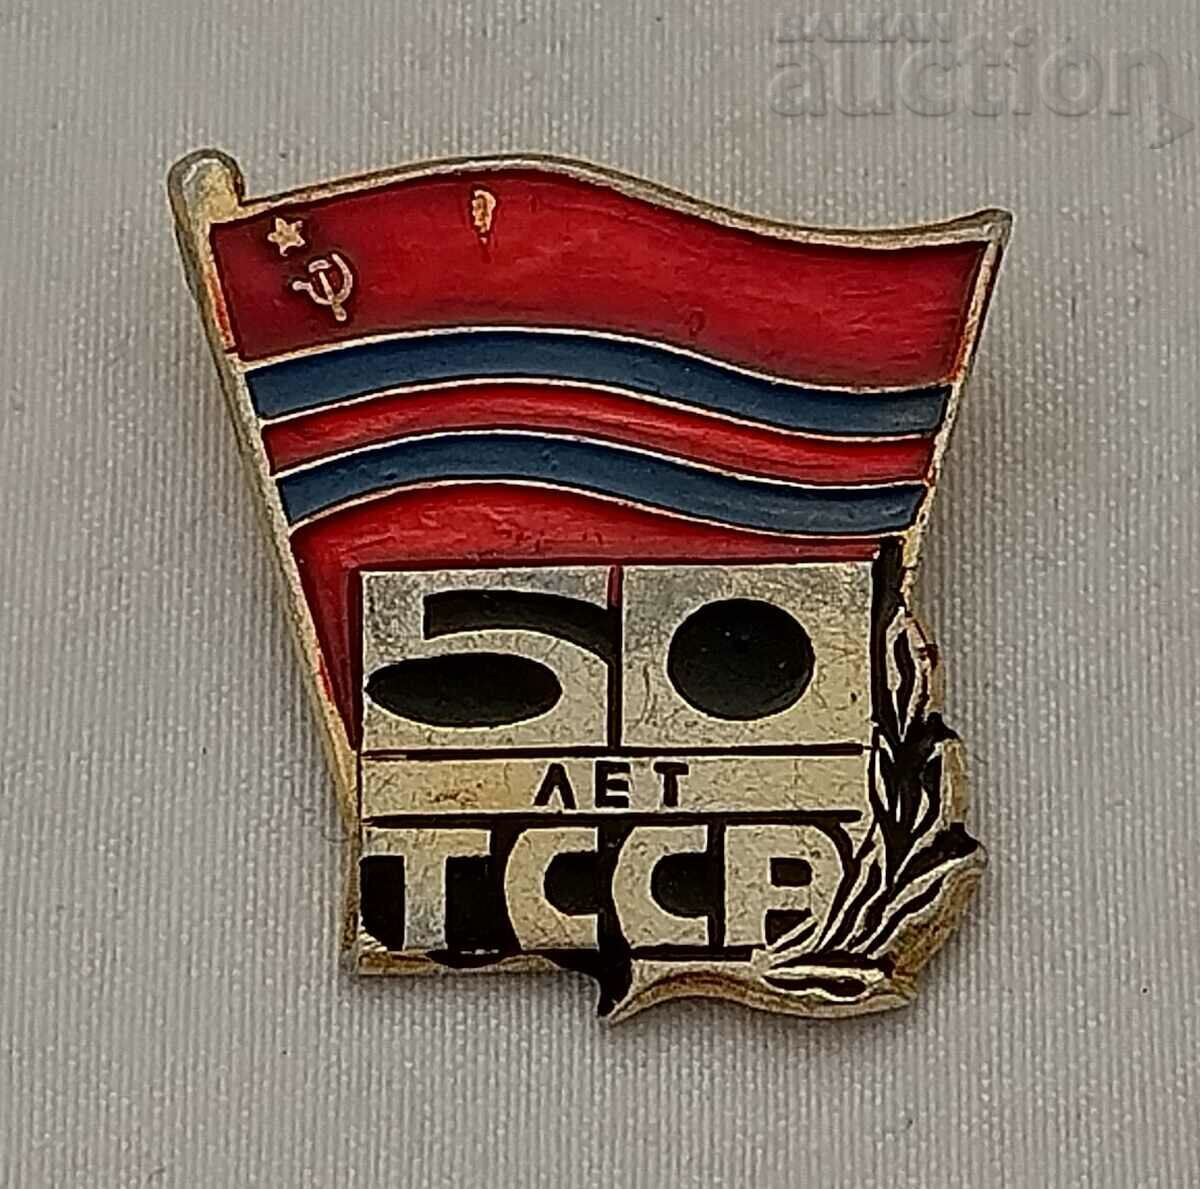 TAJIKISTAN TSSR 50 years FLAG BADGE